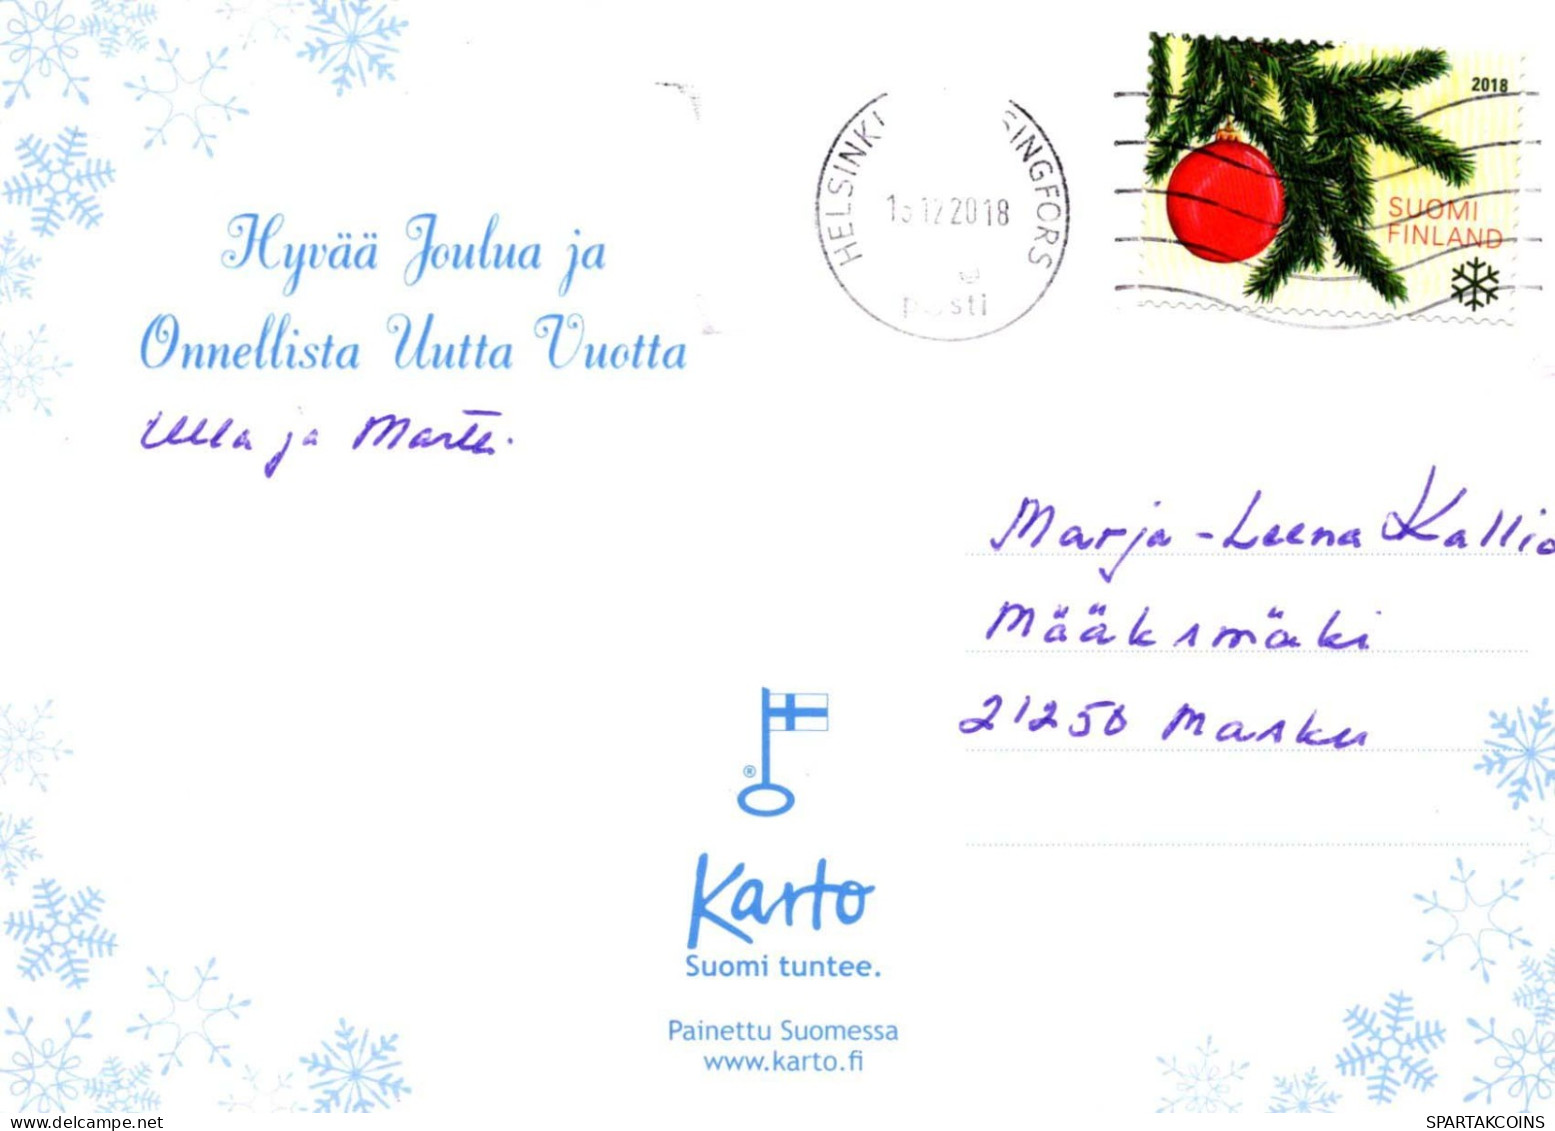 Feliz Año Navidad Vintage Tarjeta Postal CPSM #PBN086.A - Nouvel An